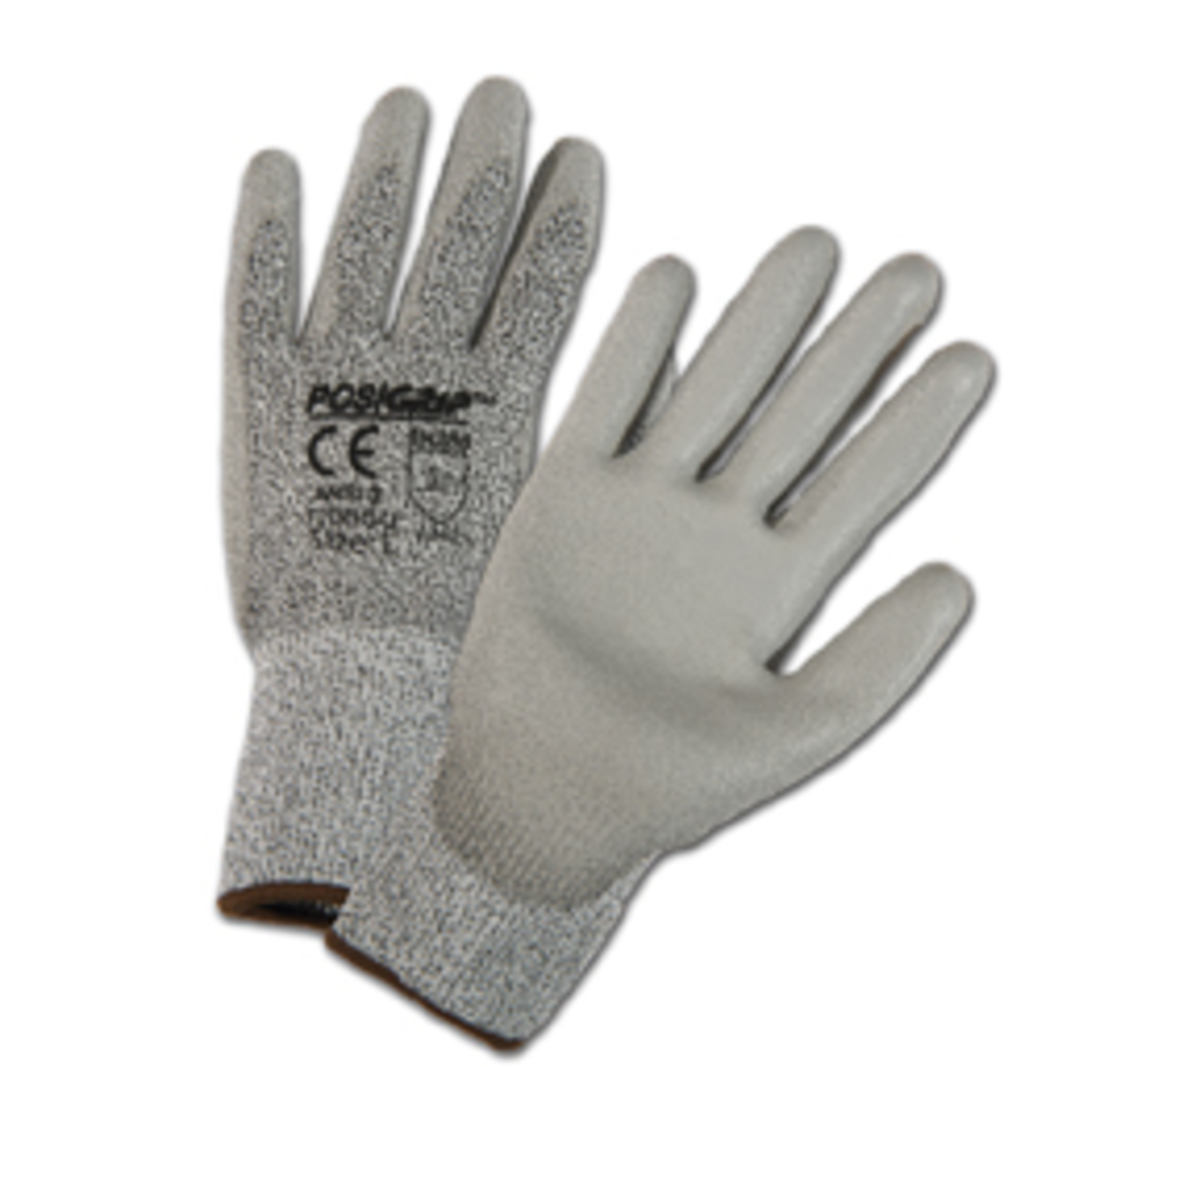 PIP® 2X PosiGrip® 13 Gauge High Performance Polyethylene Cut Resistant Gloves With Polyurethane Coating